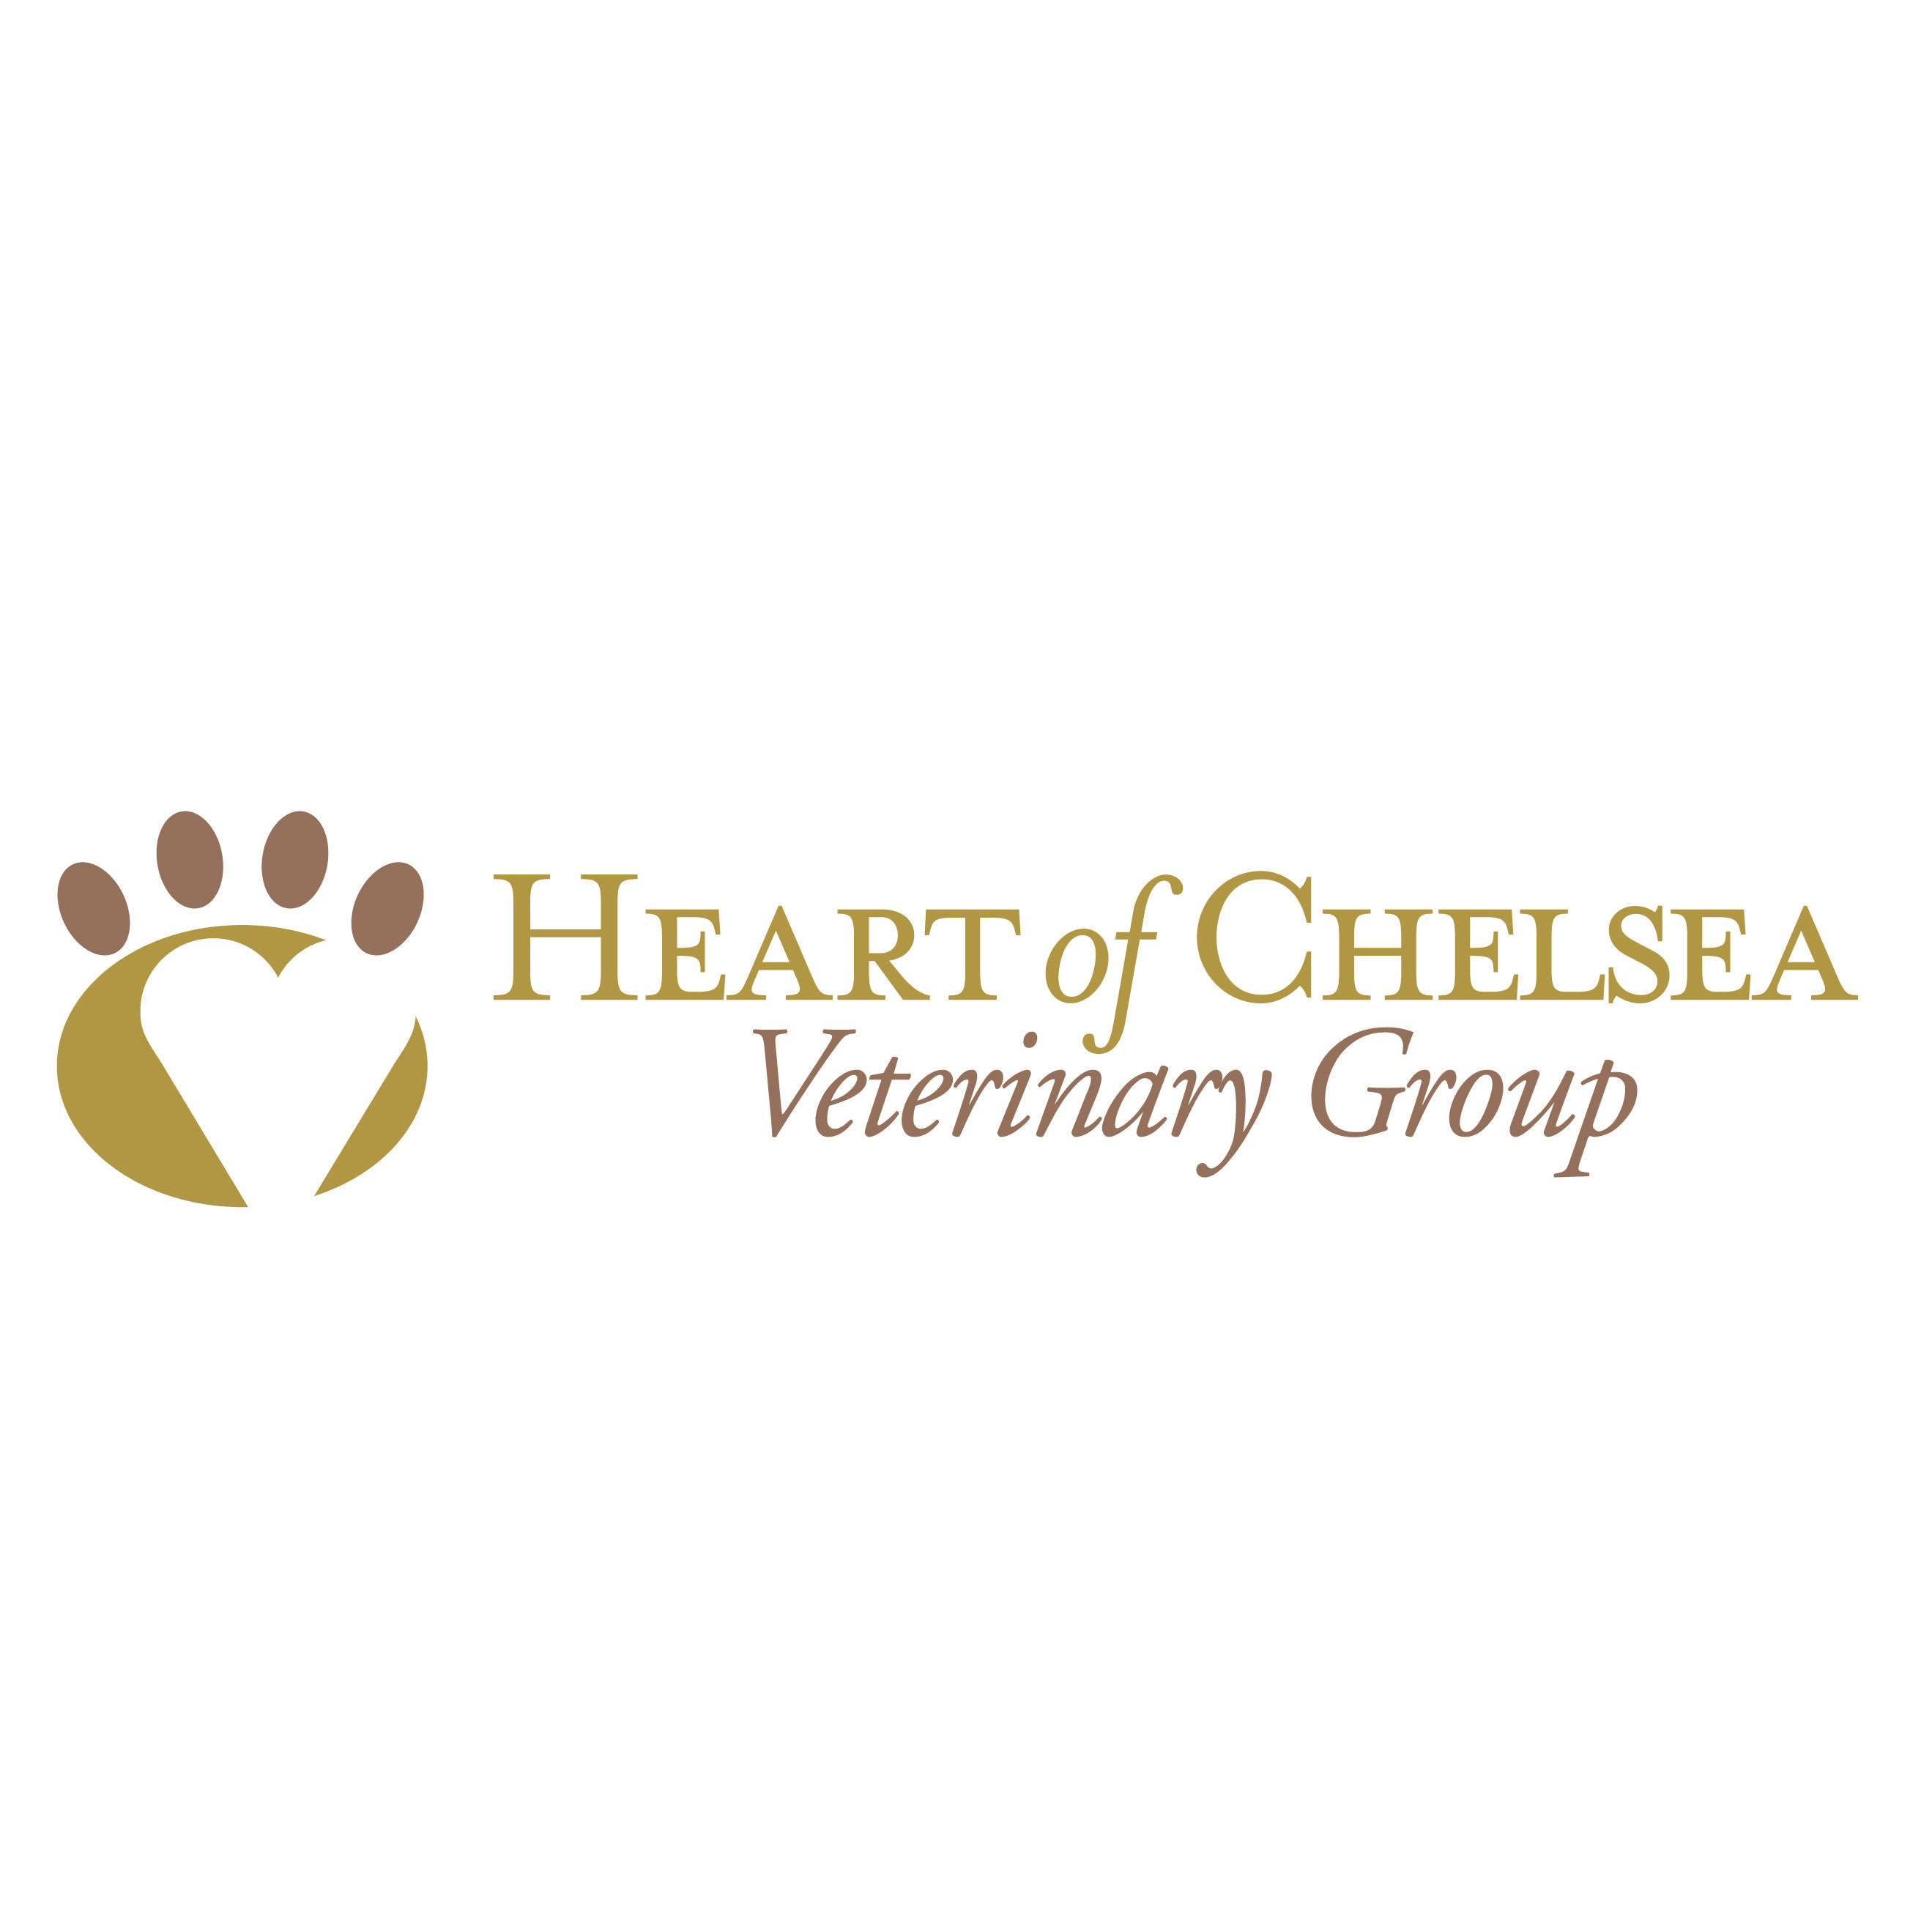 Chelsea Animal Hospital Logo